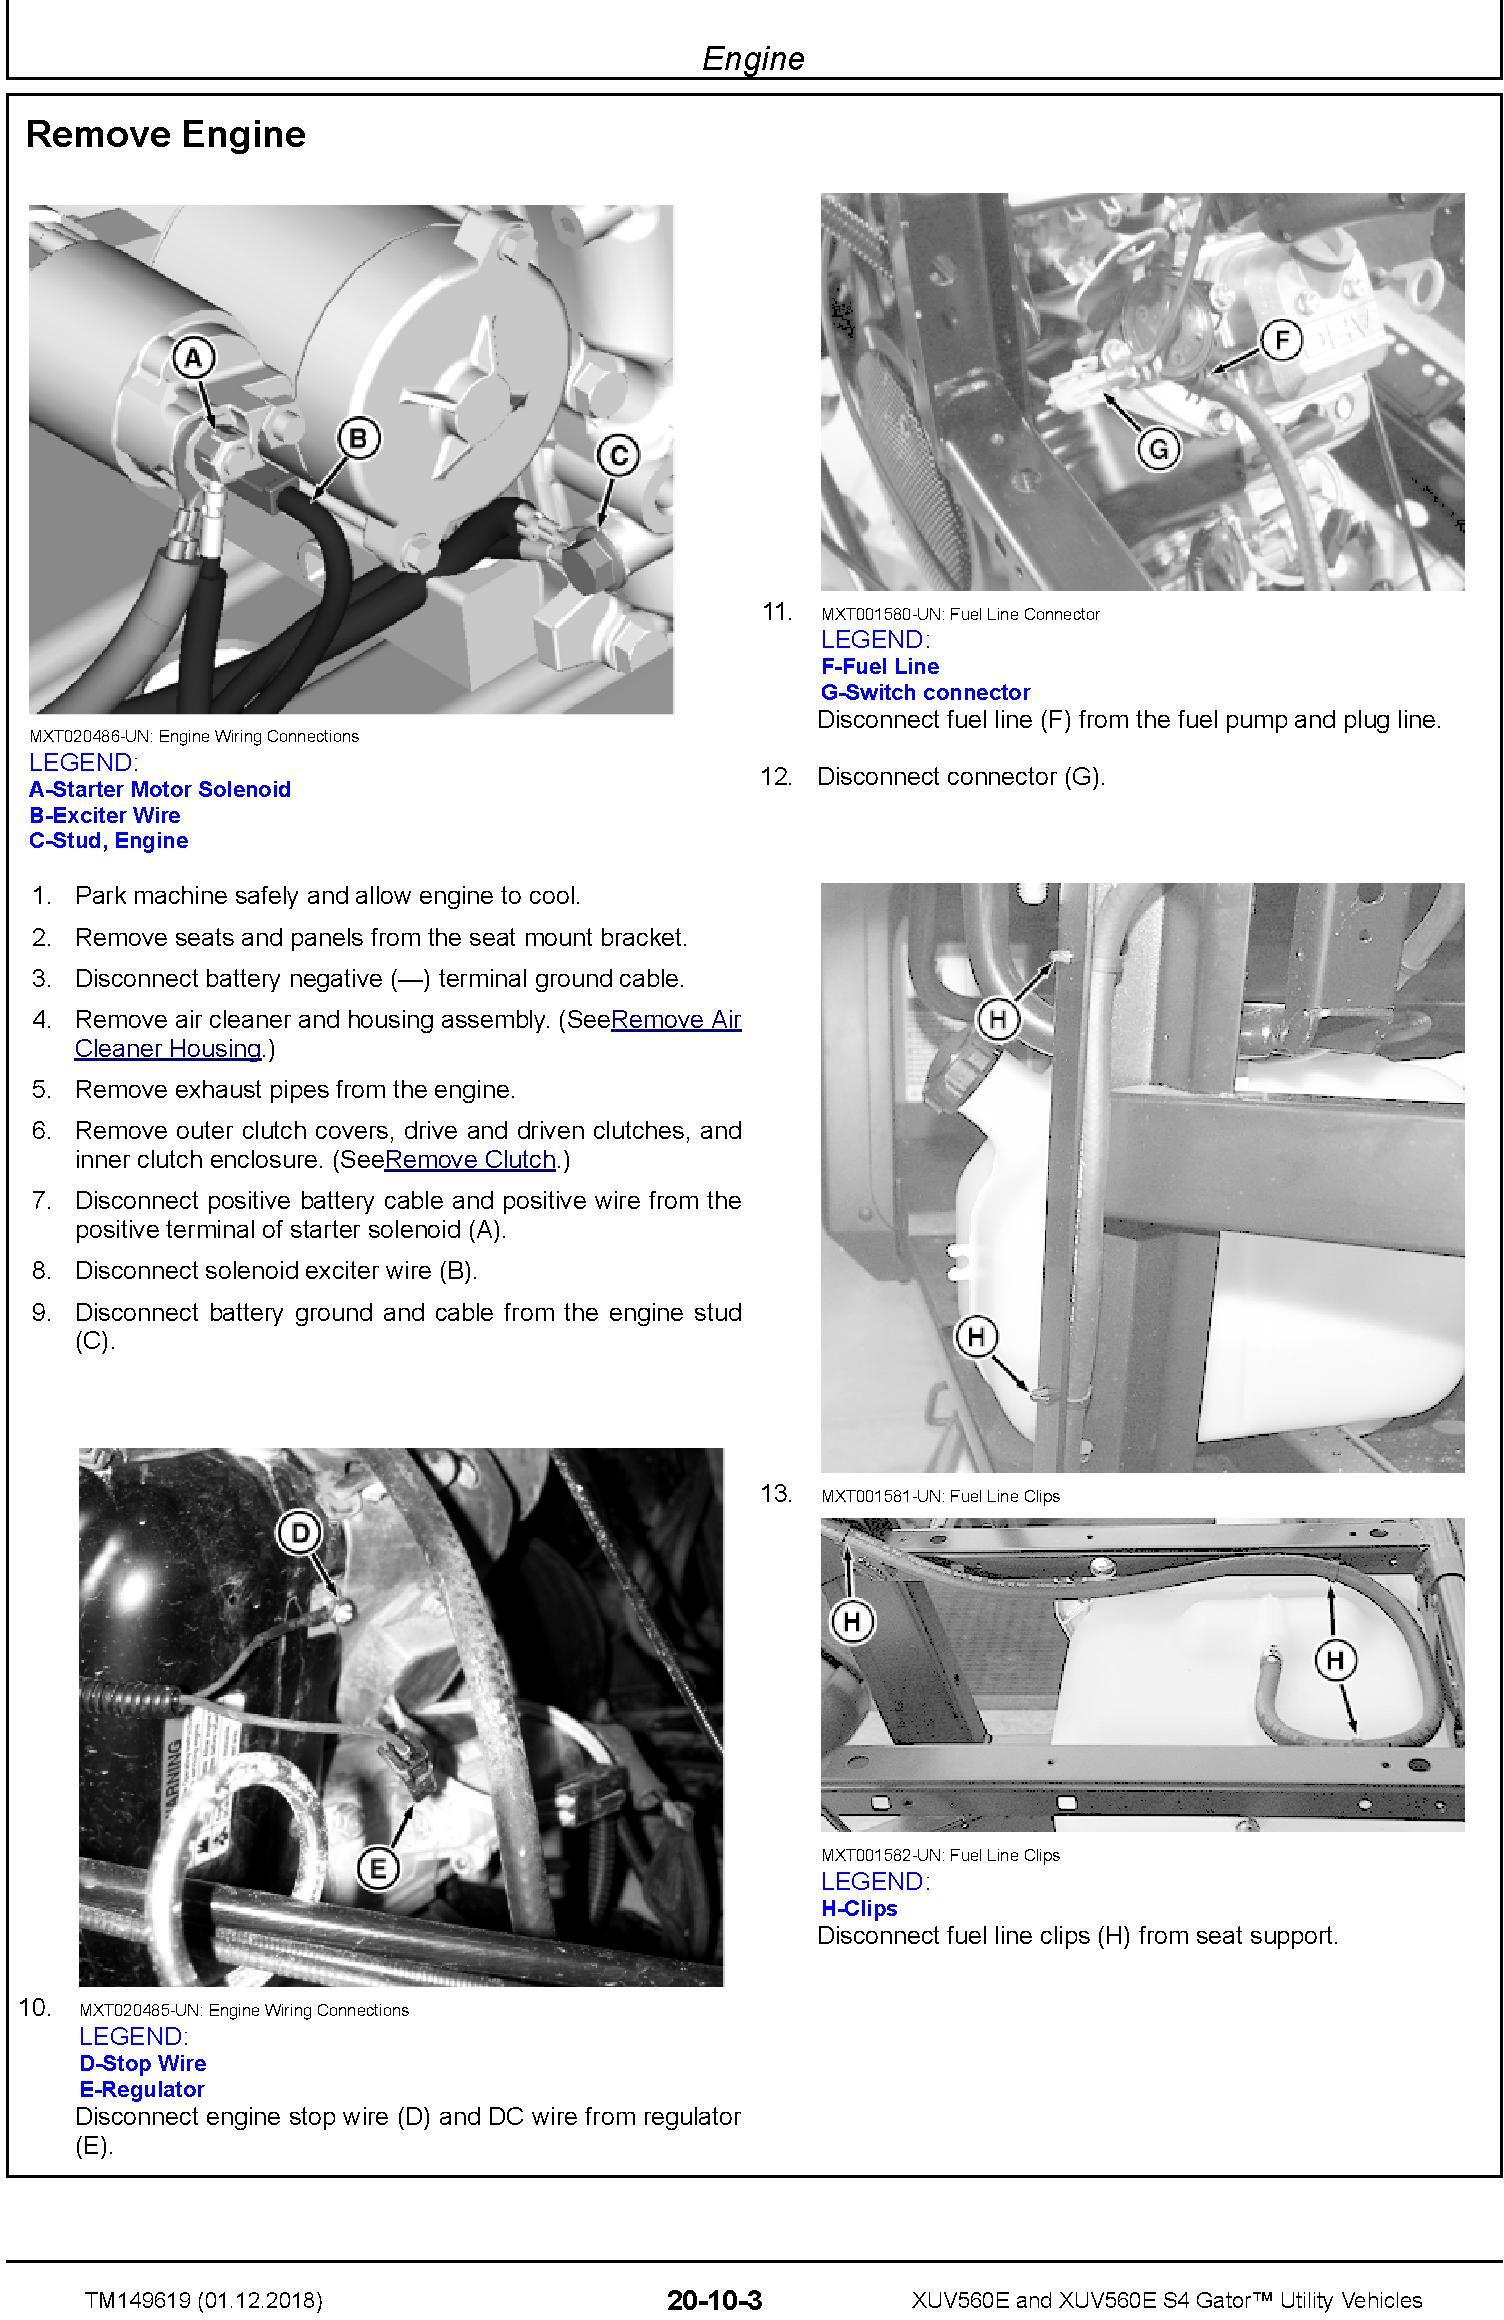 John Deere XUV560E and XUV560E S4 Gator Utility Vehicles (SN. 010001-) Technical Manual (TM149619) - 1